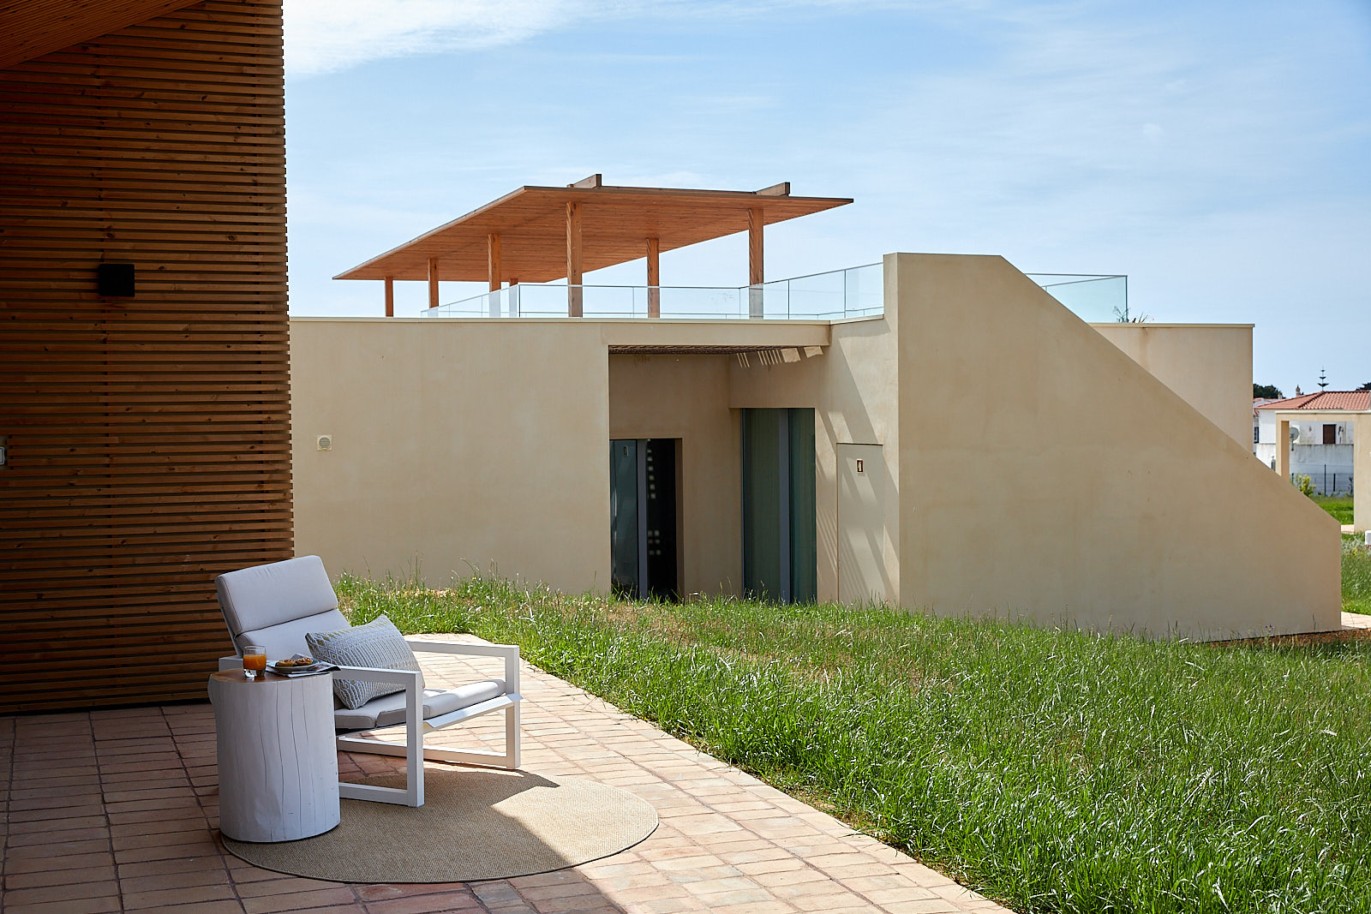 2 bedroom apartment in resort, for sale in Porches, Algarve_229179